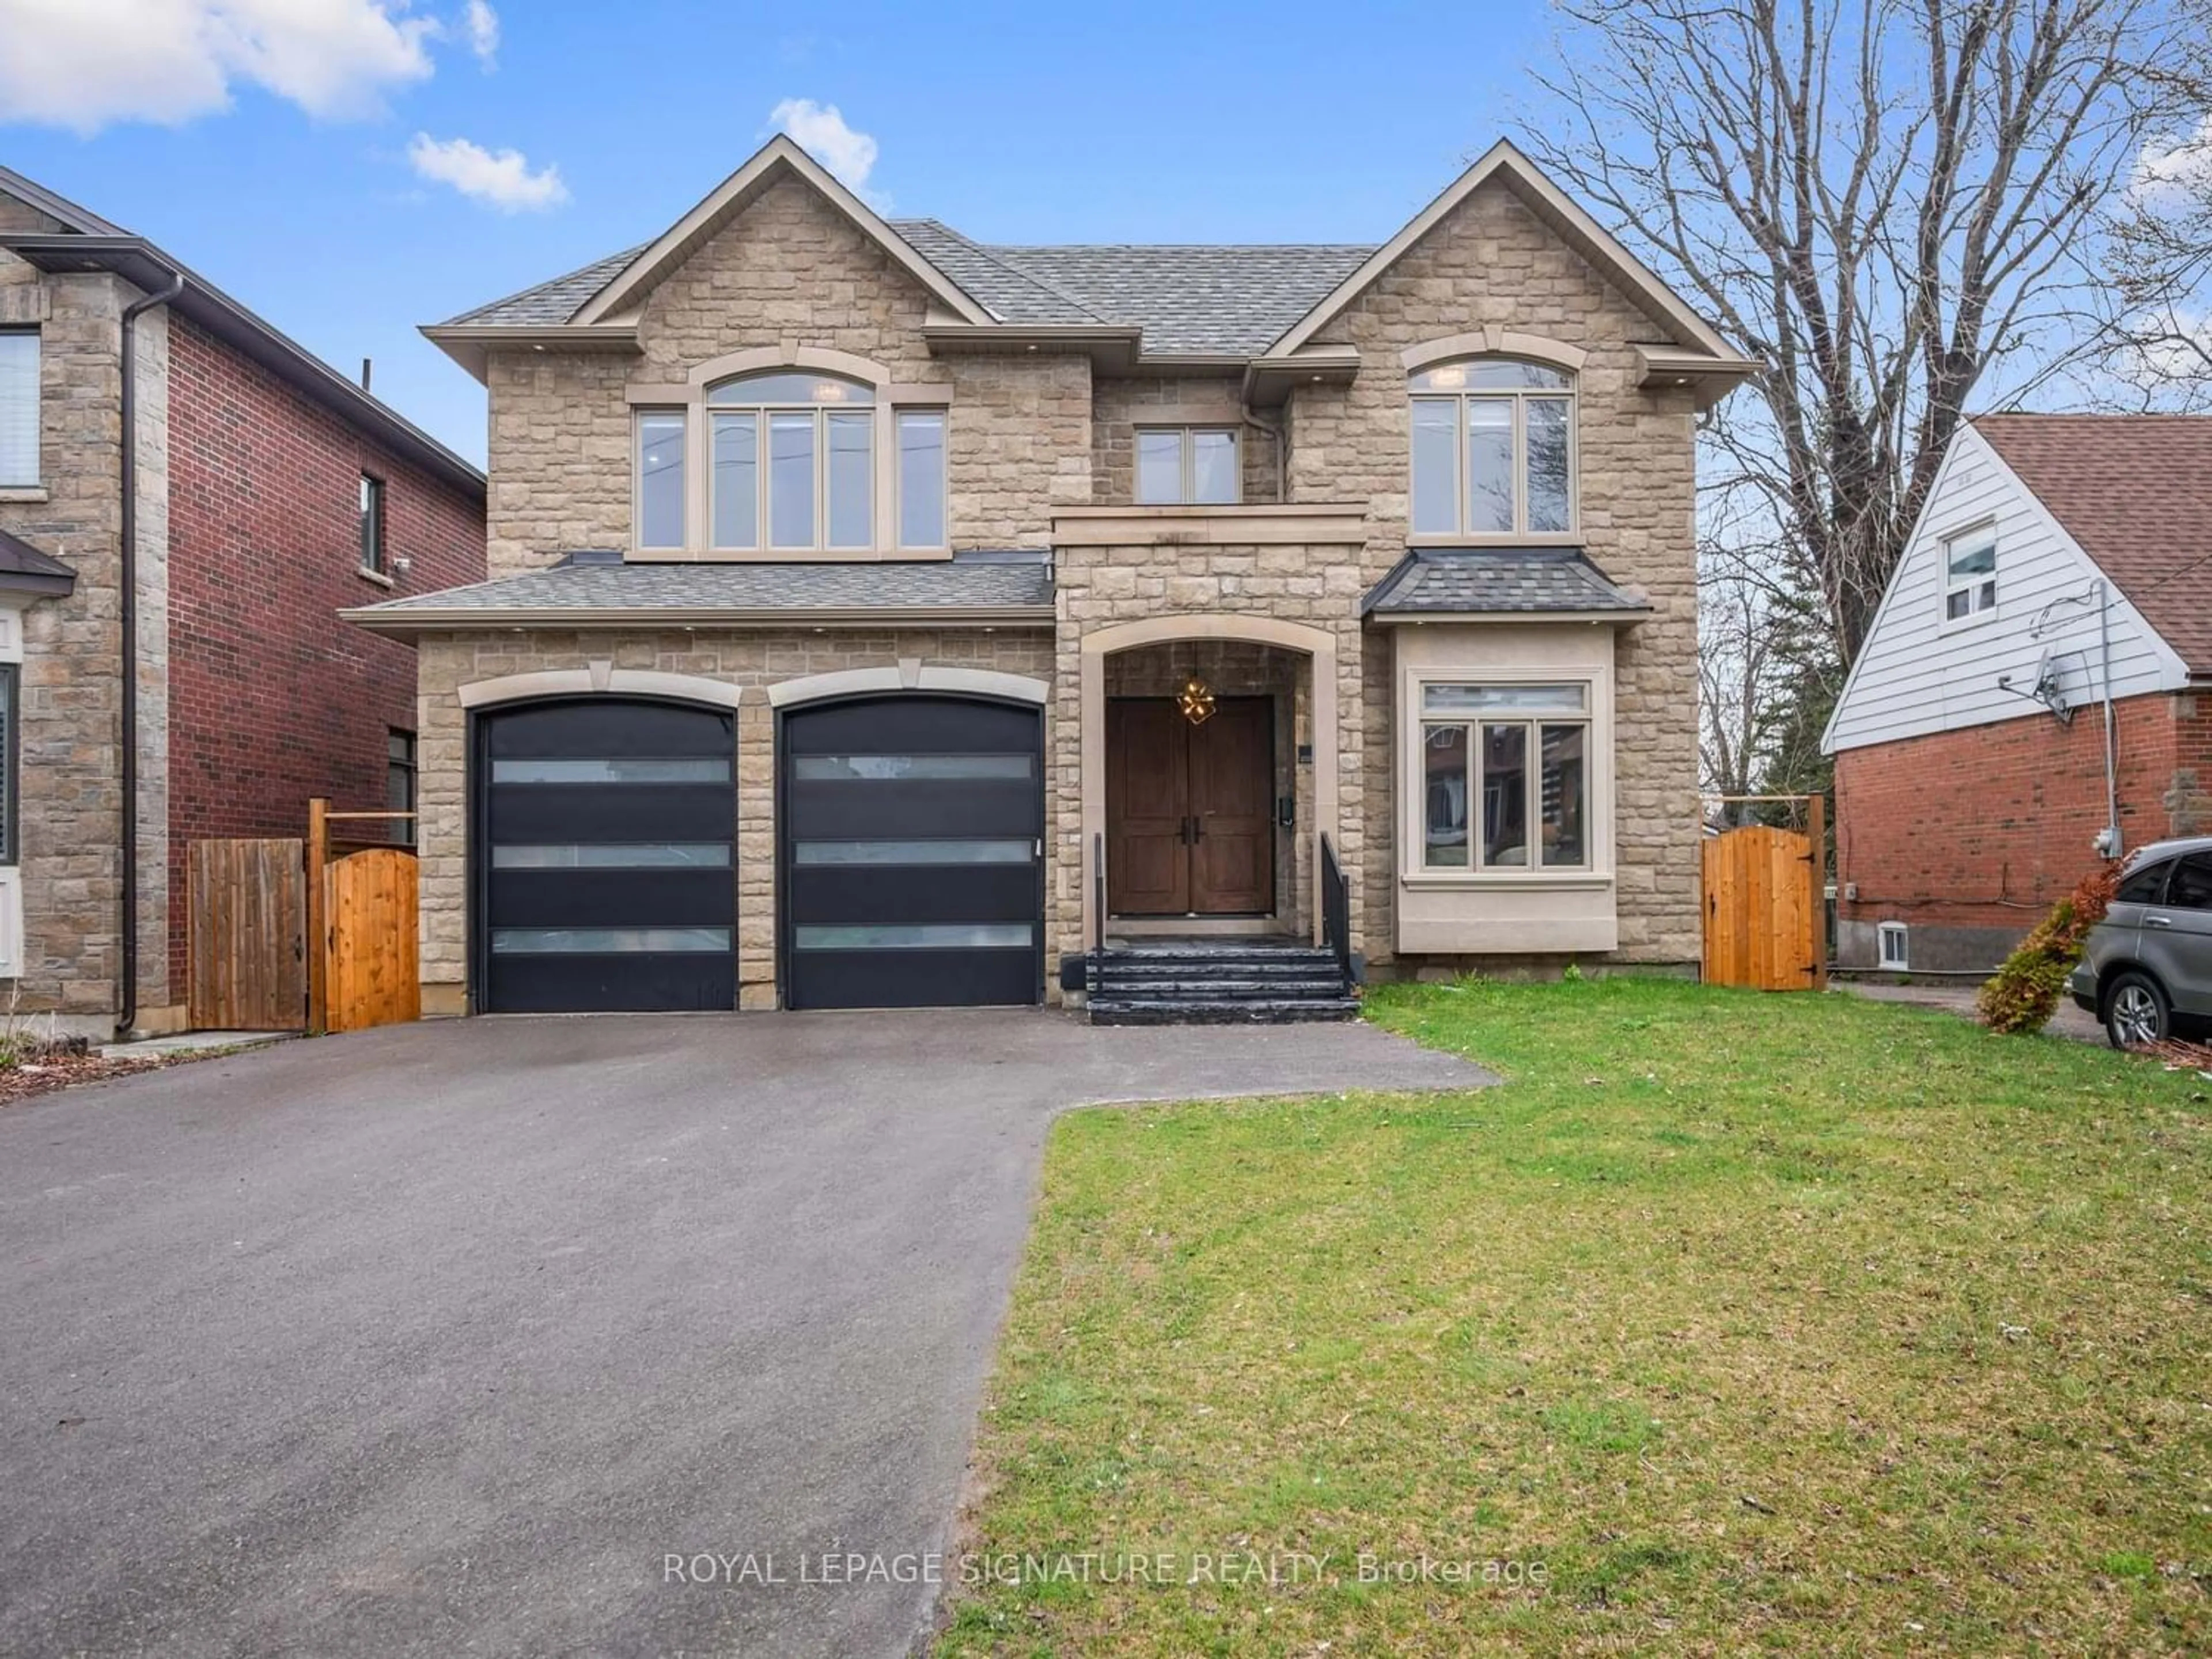 Home with brick exterior material for 88 Bellamy Rd, Toronto Ontario M1M 3P7